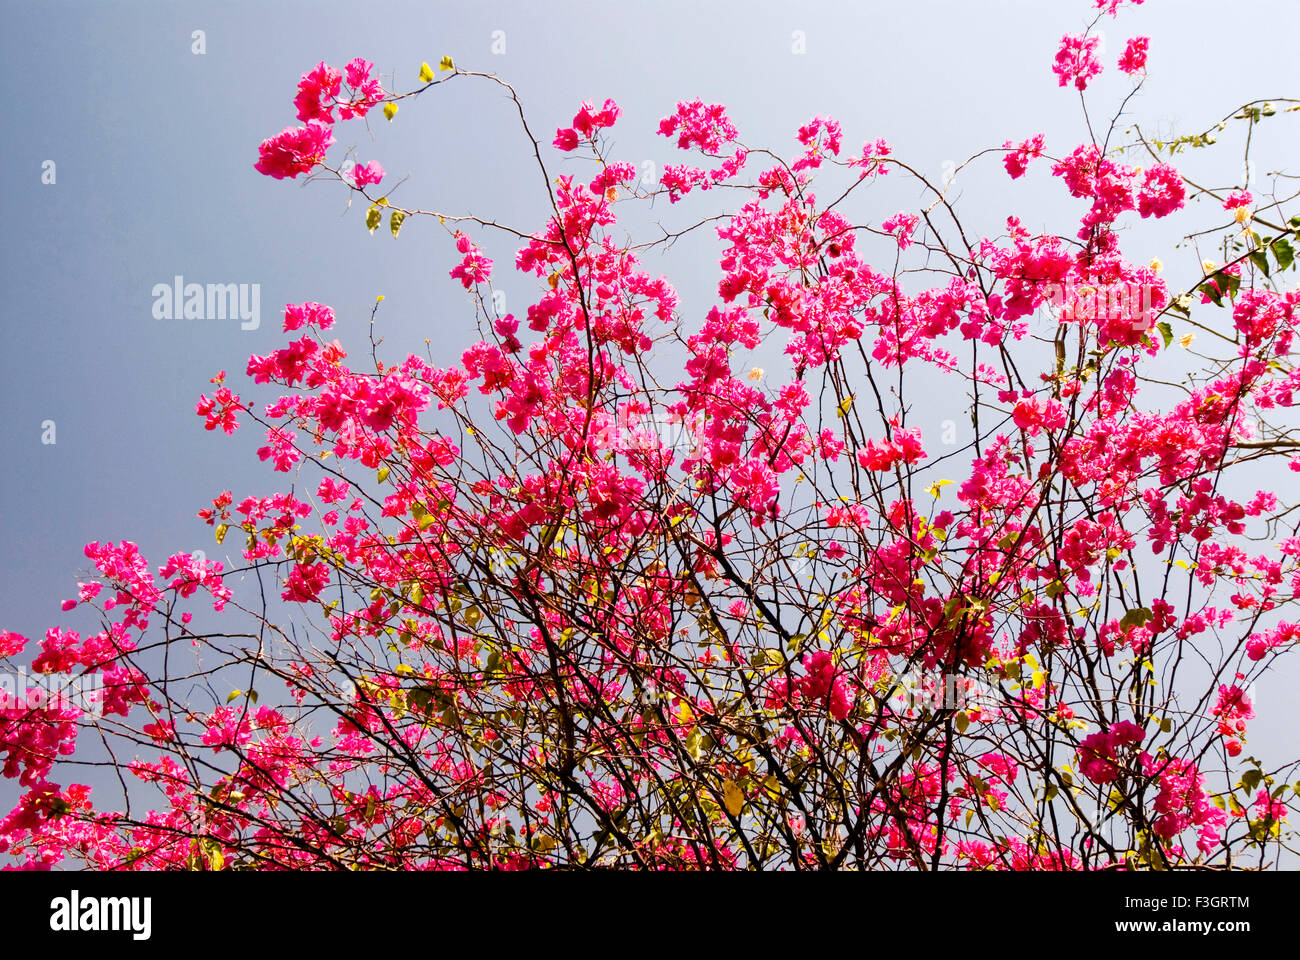 Bougainvillea flowering tree, India, Asia Stock Photo